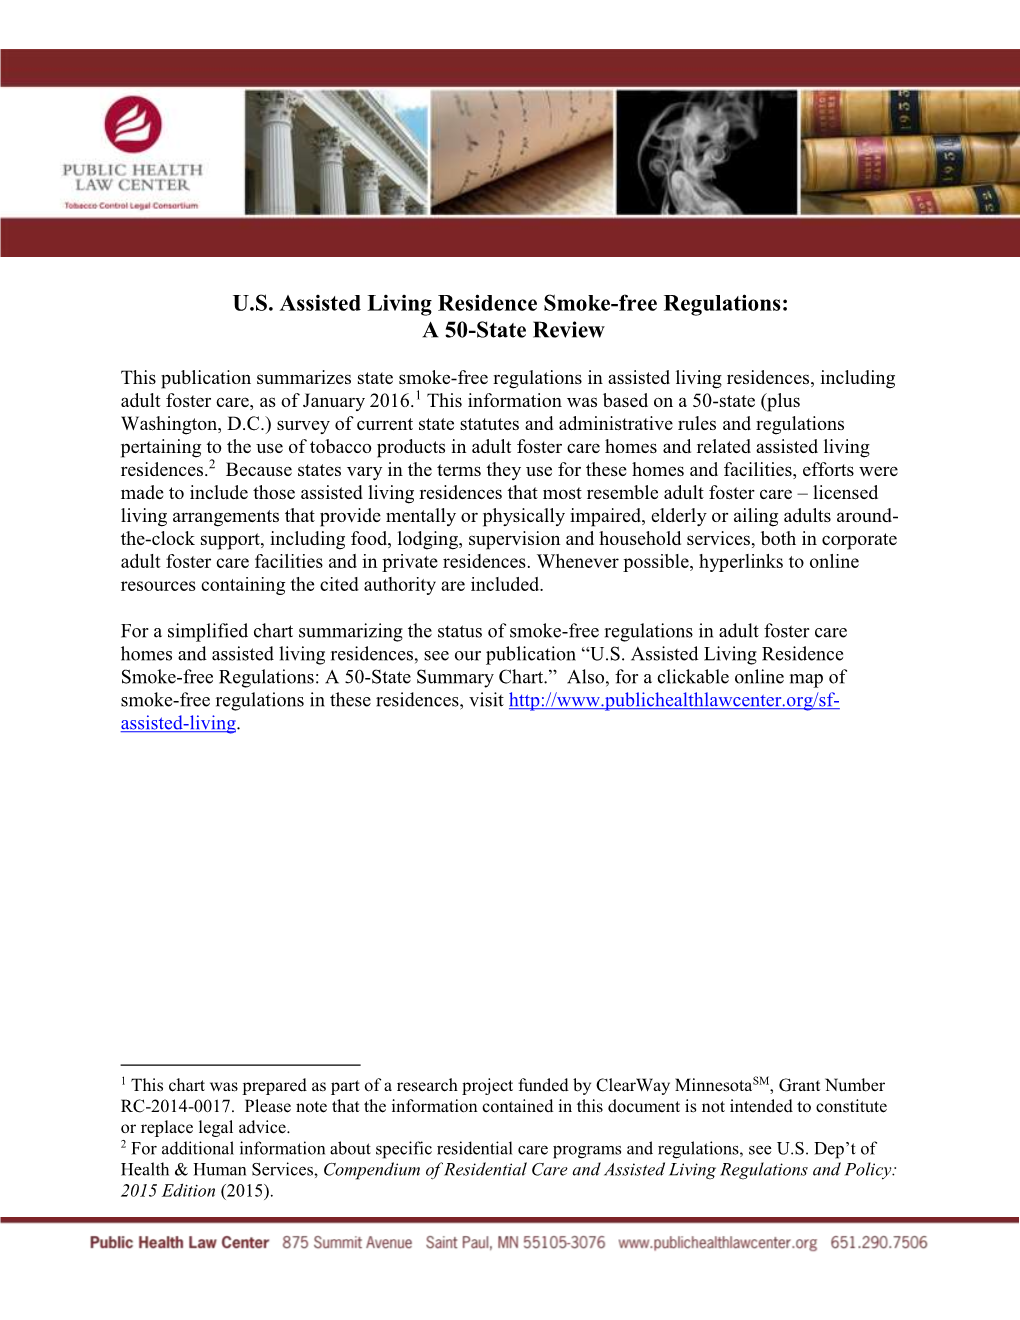 US Assisted Living Residence Smoke-Free Regulations